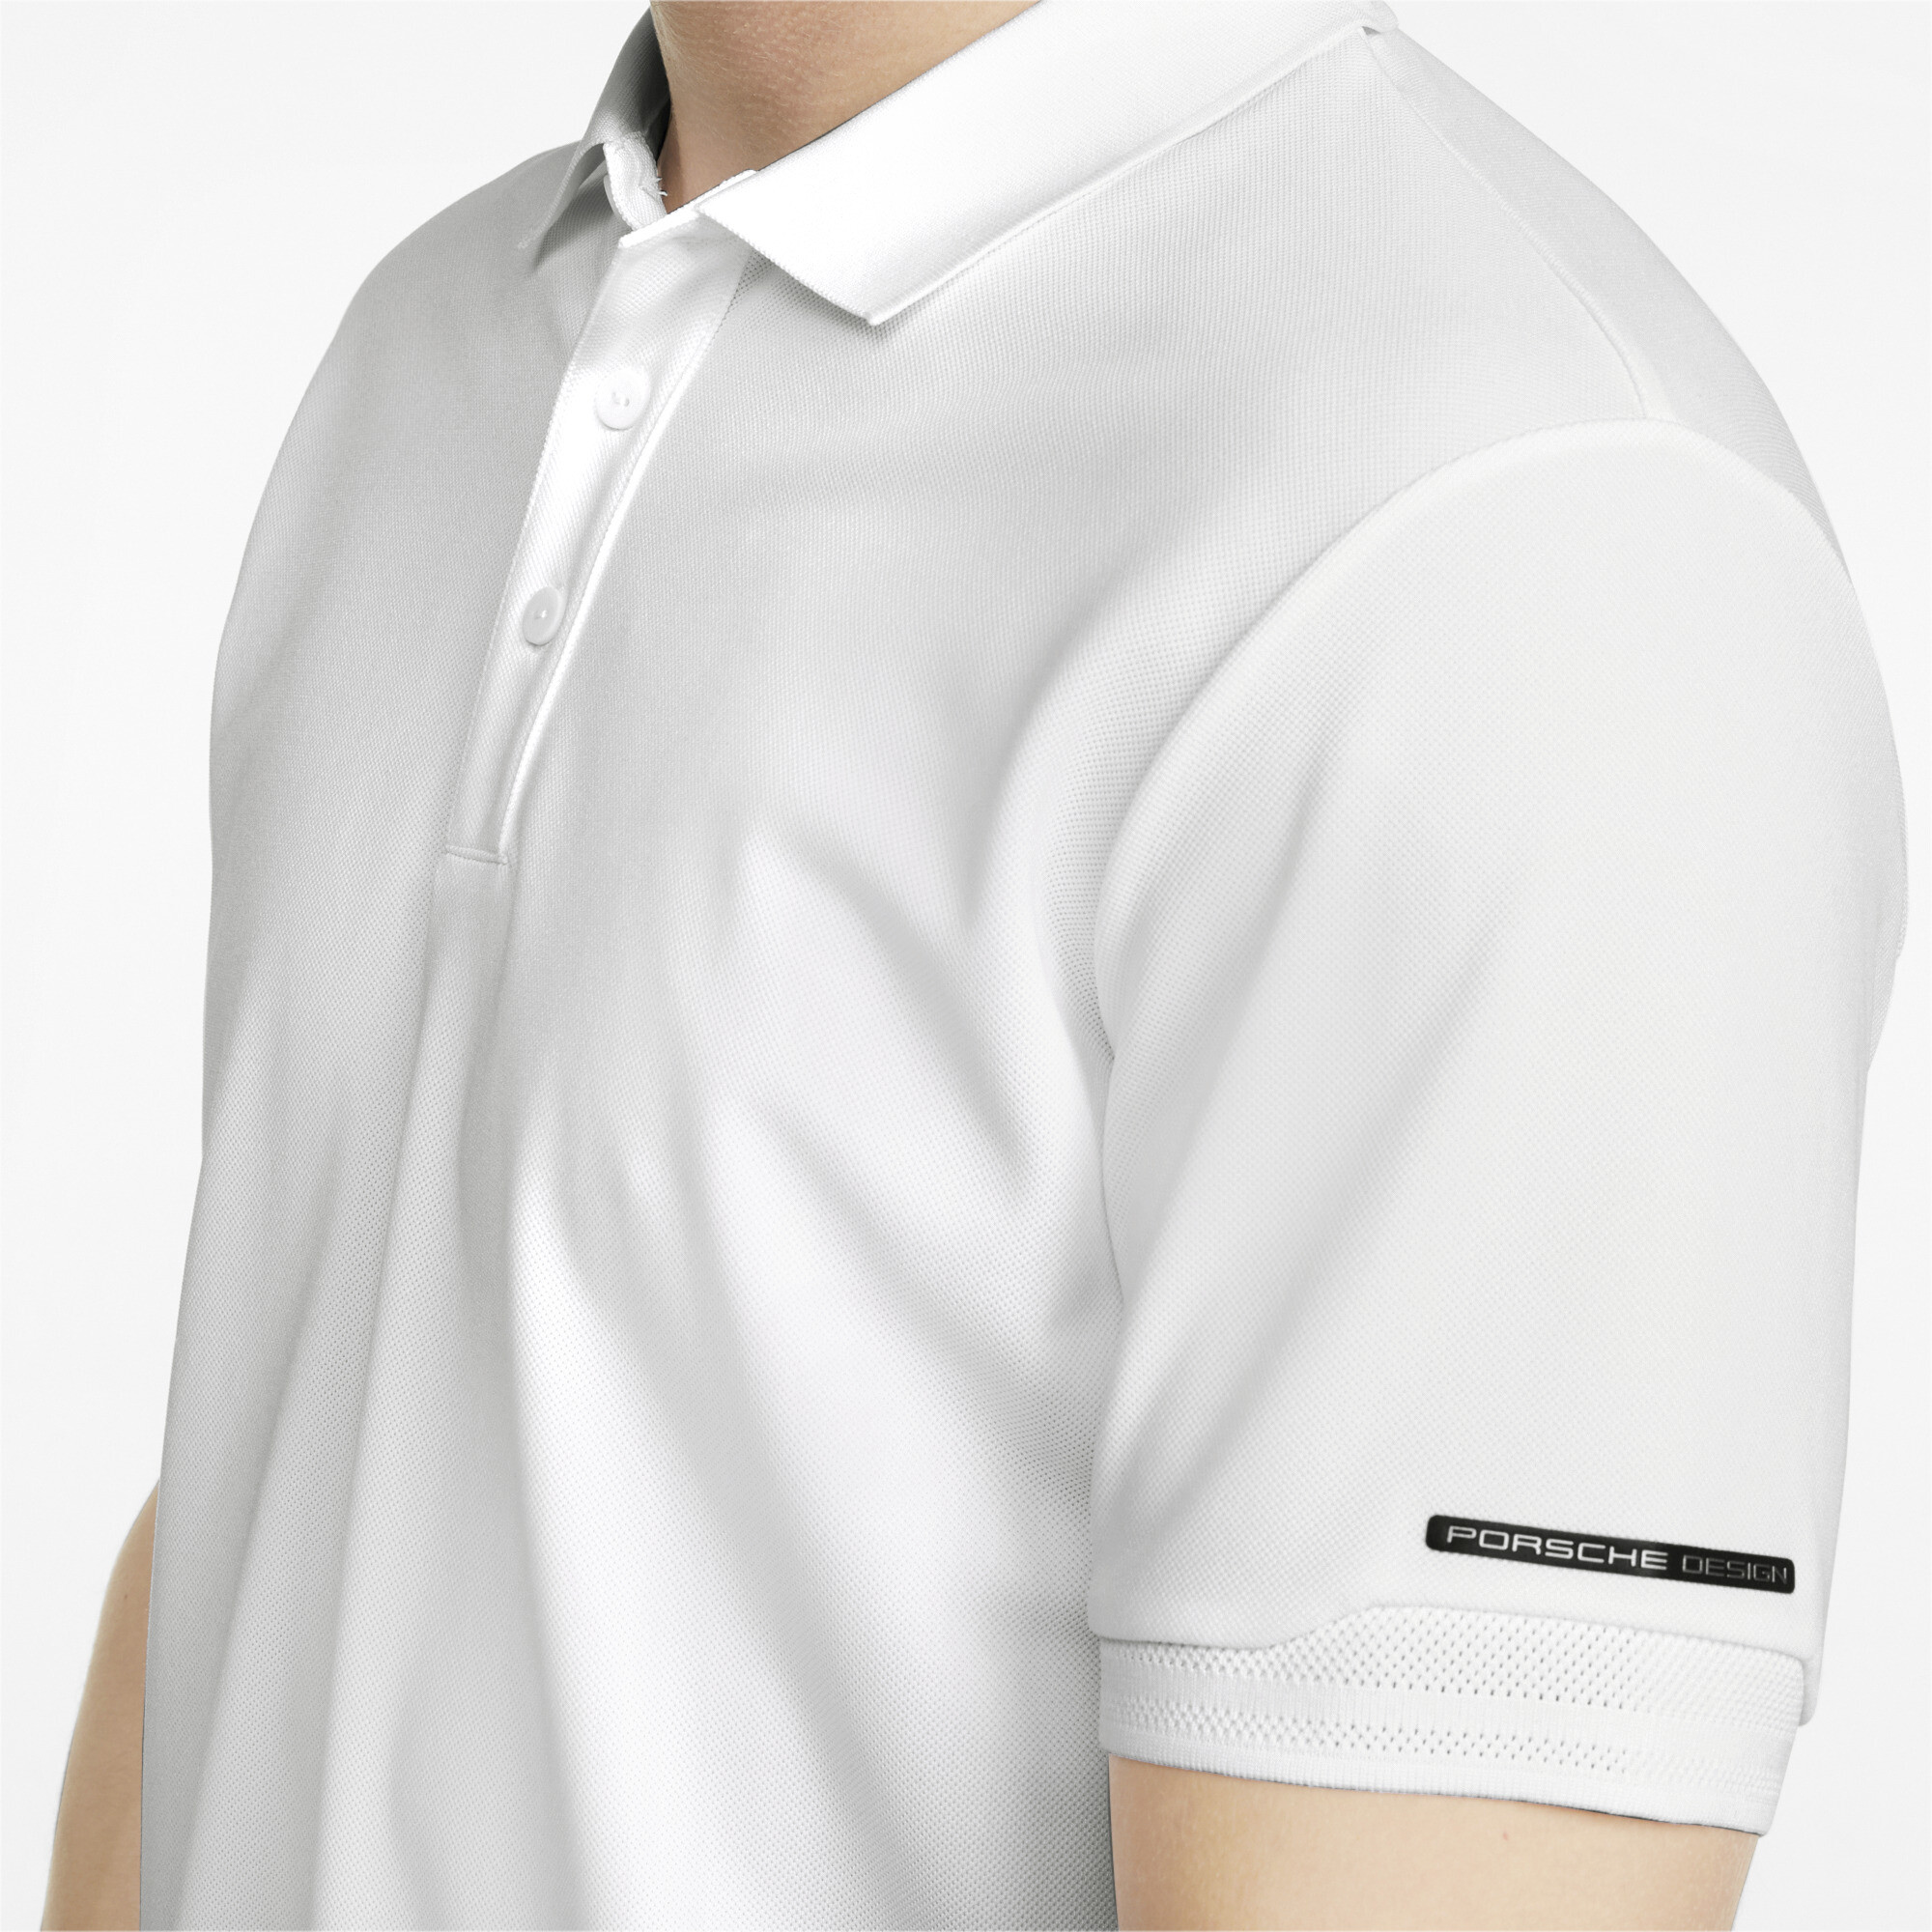 Men's PUMA Porsche Design Polo Shirt In White, Size Large